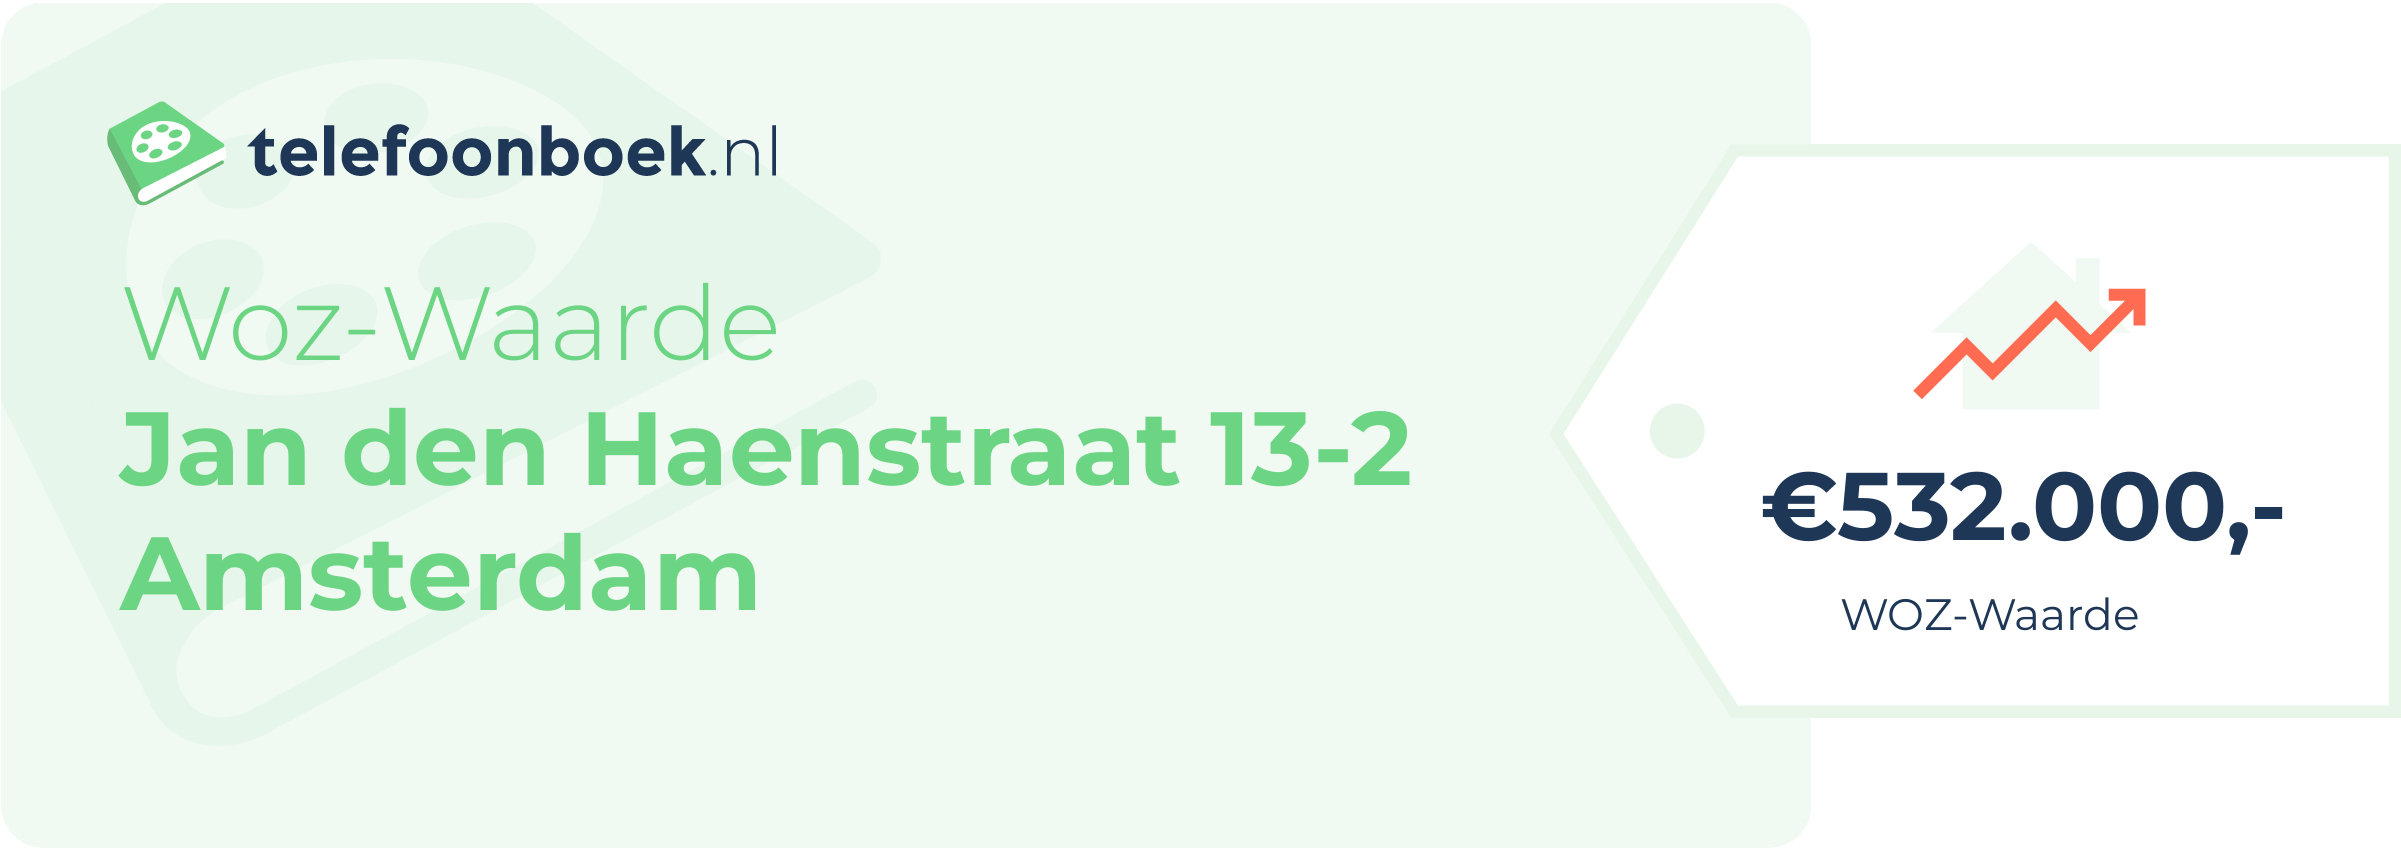 WOZ-waarde Jan Den Haenstraat 13-2 Amsterdam